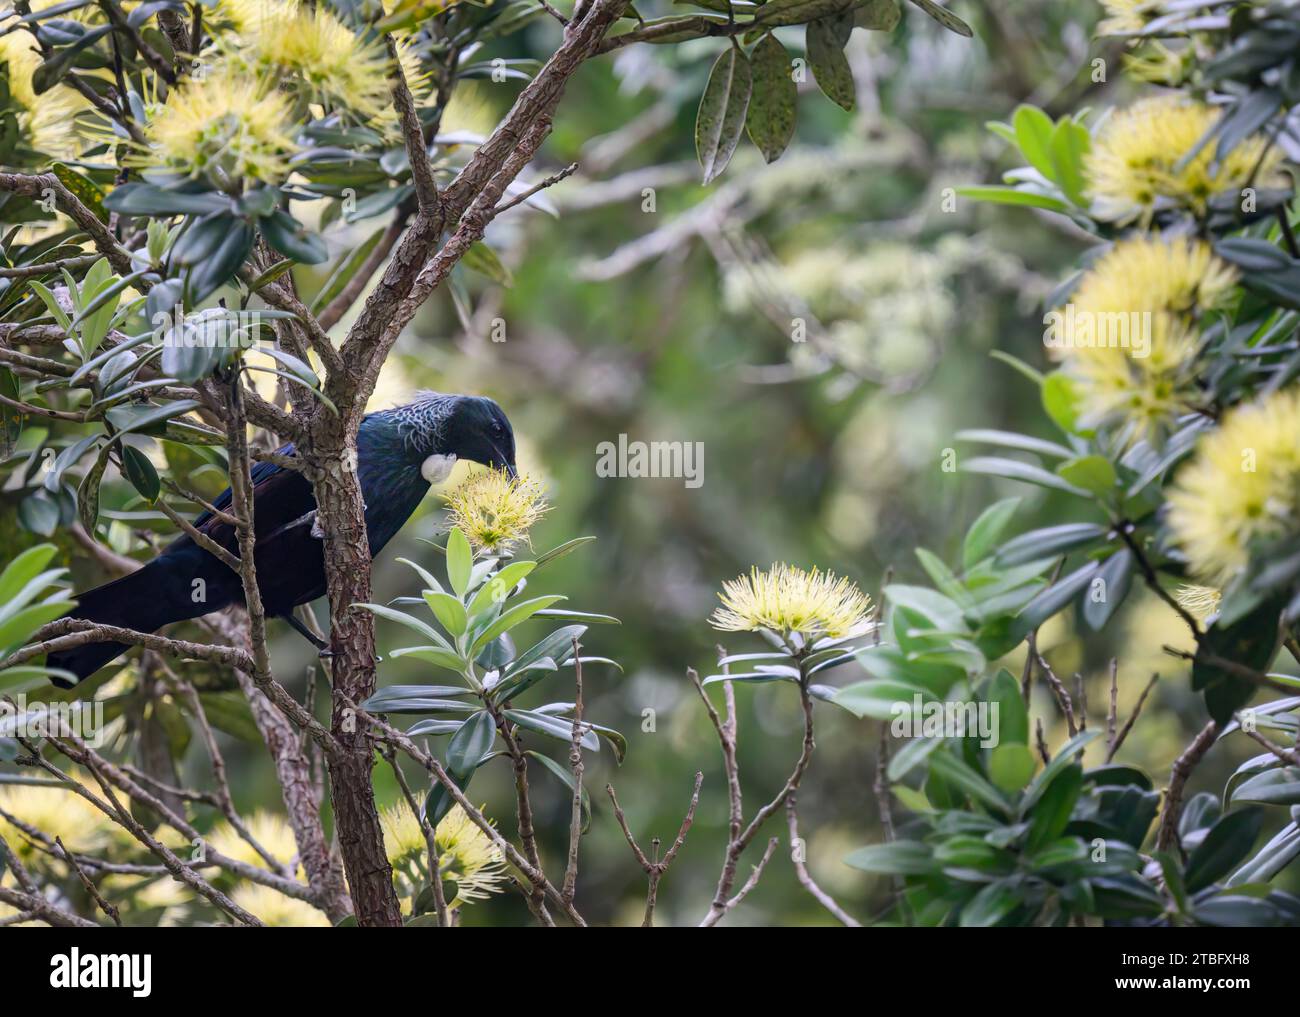 Tui bird feeding on nectar on yellow Pohutukawa flowers. New Zealand Christmas tree. Auckland. Stock Photo